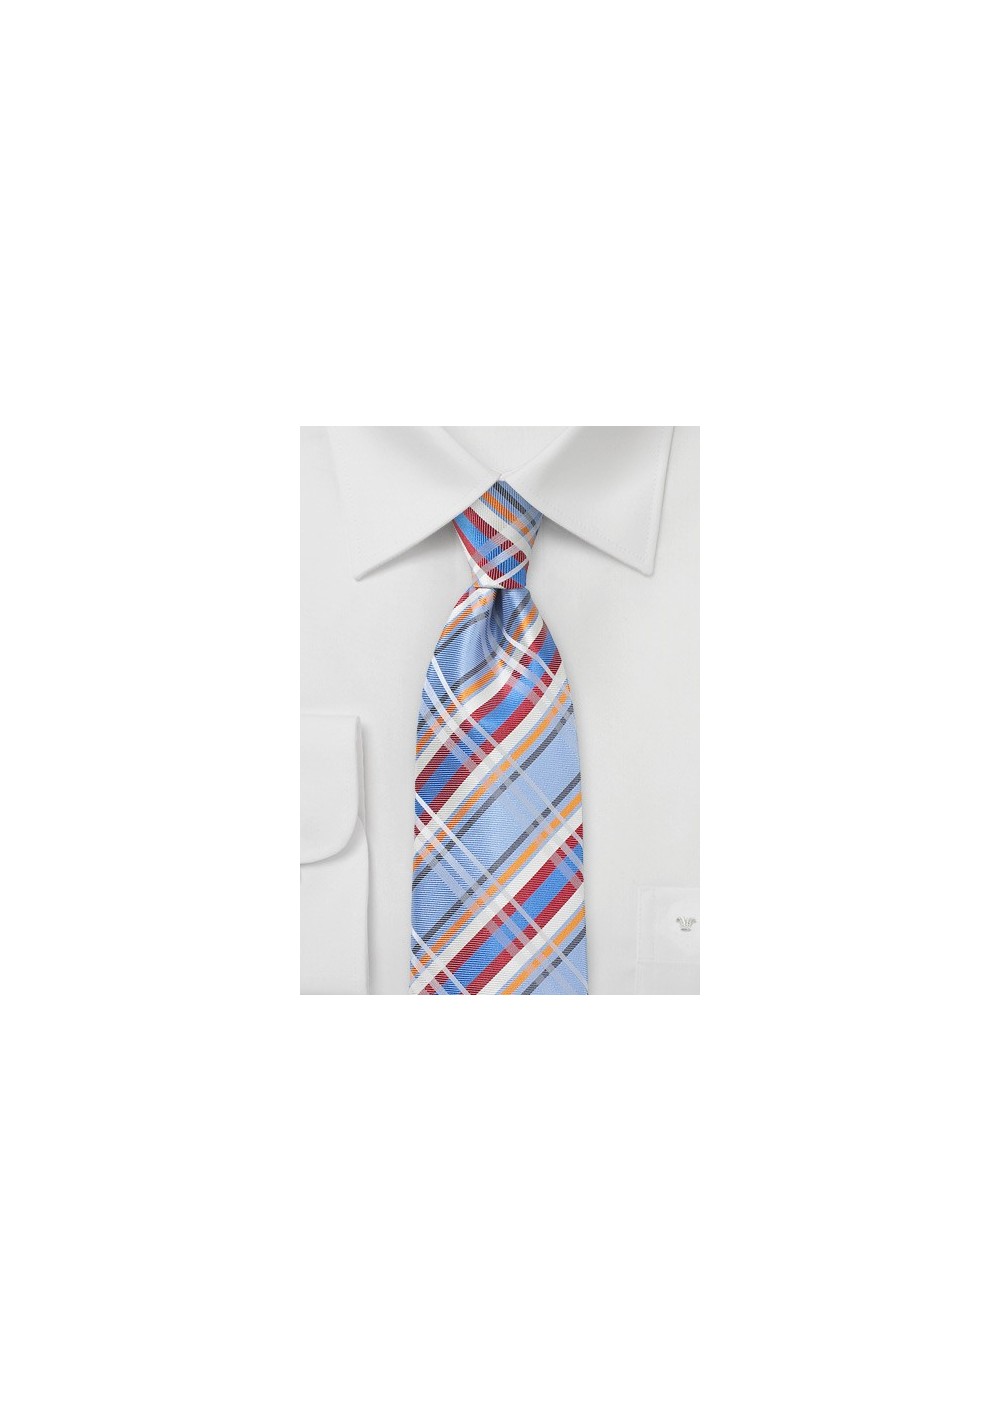 Plaid Silk Tie in Light Blue and Orange